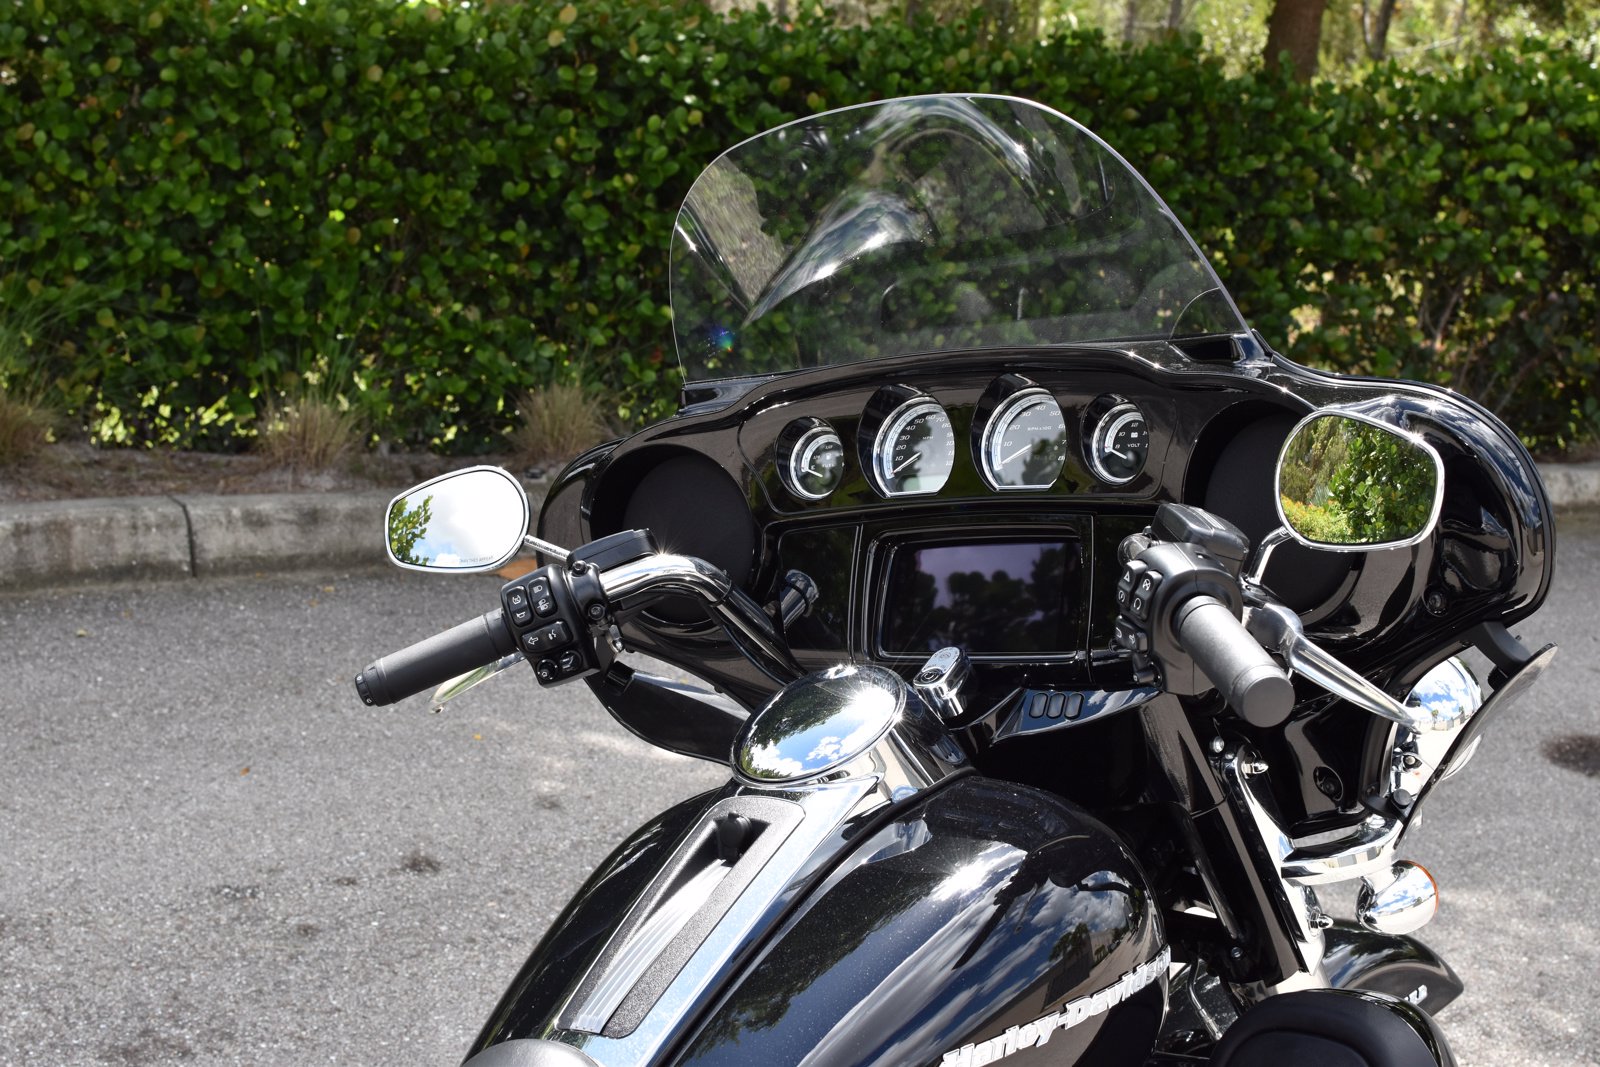 Pre-Owned 2020 Harley-Davidson Ultra Limited FLHTK Touring in Fort Myers #U653851 | Rockstar ...